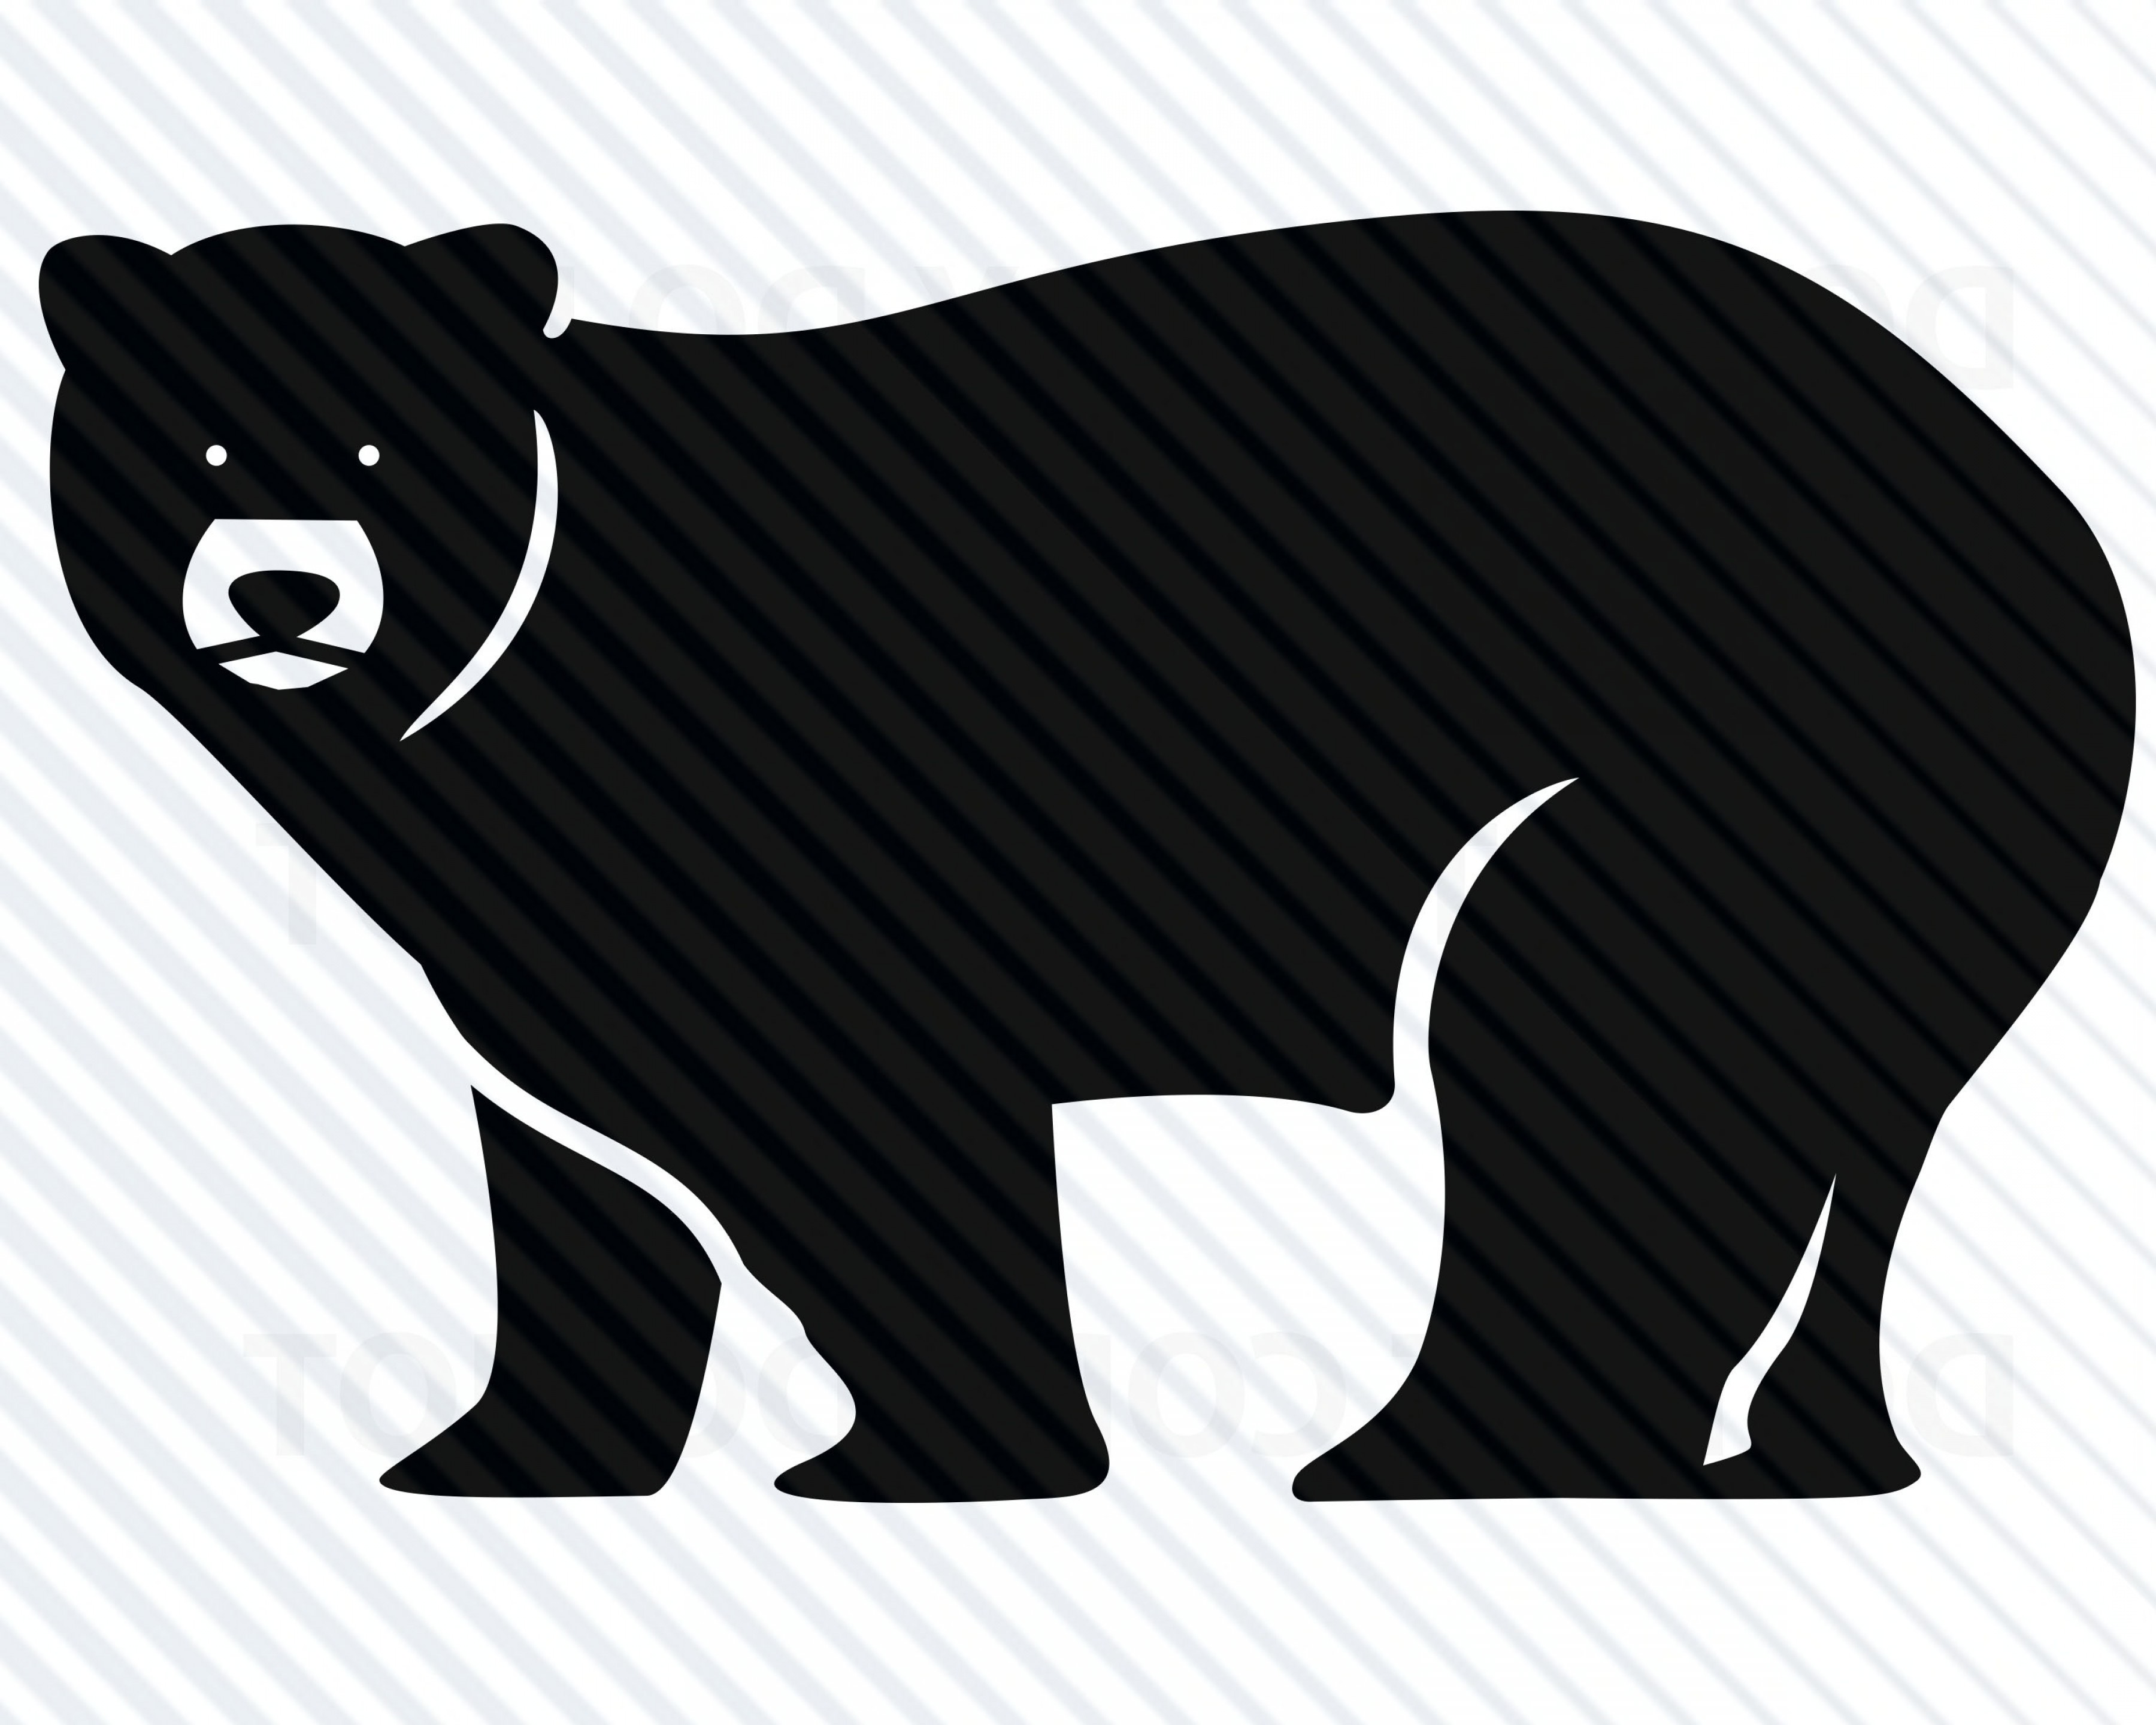 Bears 2 shop. Барибал медведь. Медведь СВГ. Силуэт медведя. Очертание медведя.